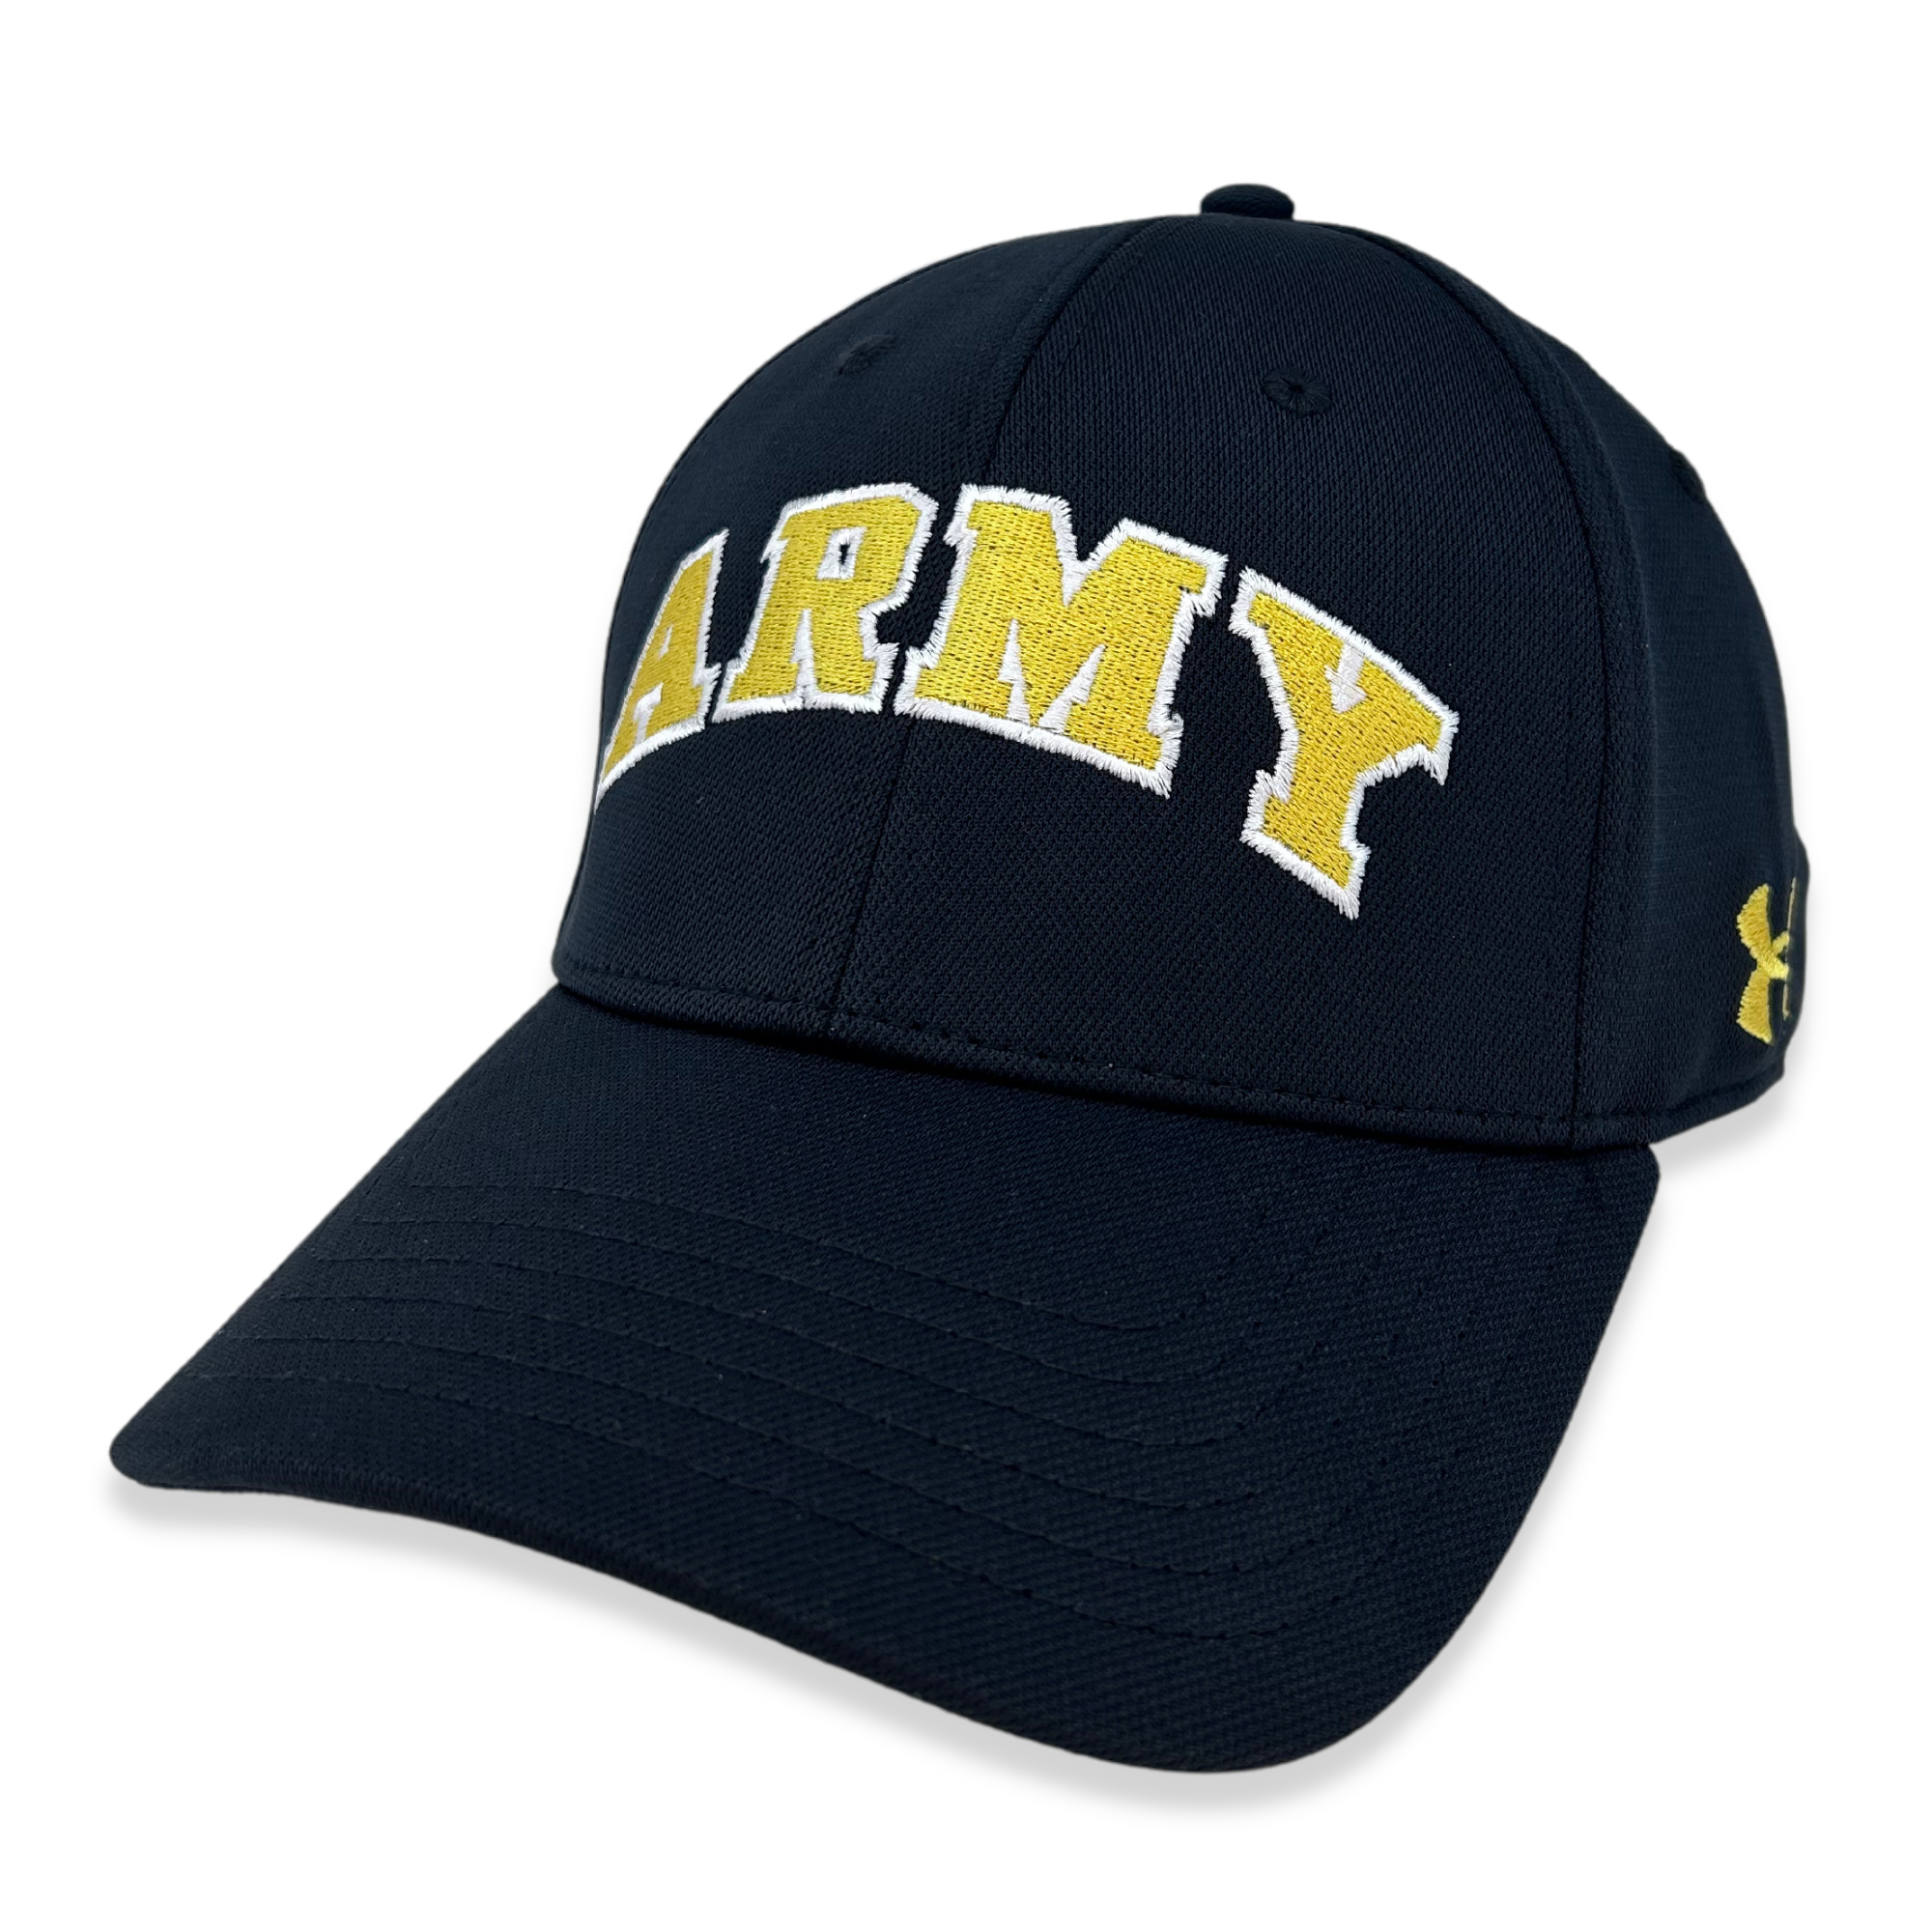 Army Under Fit Hat Blitzing Flex Armour (Black)